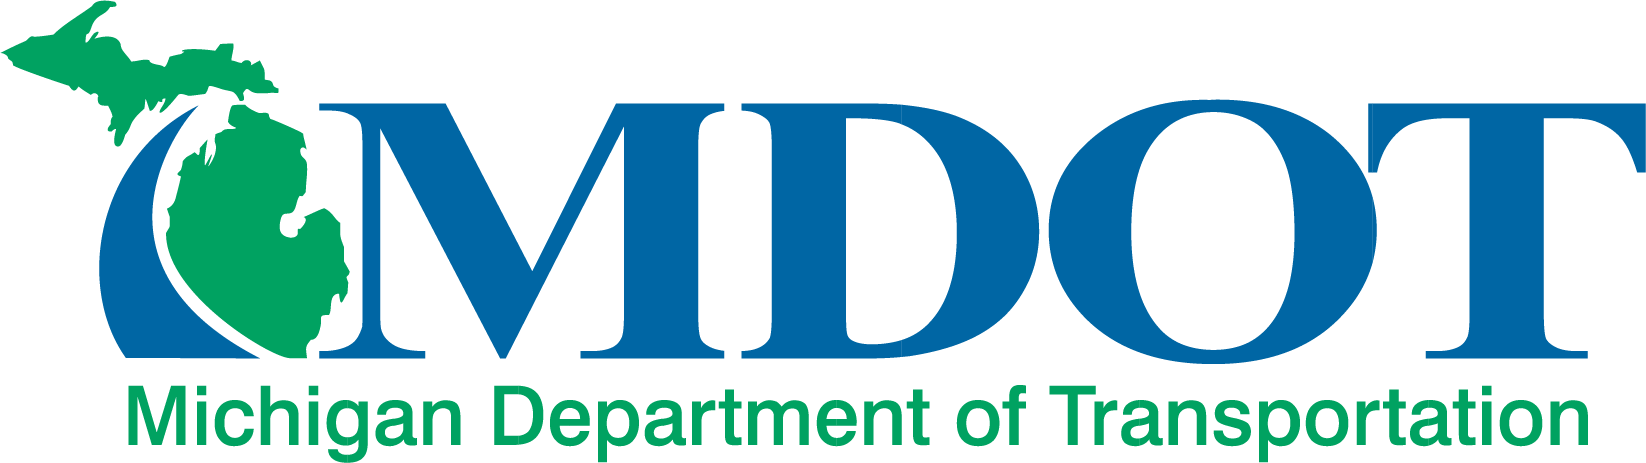 Michigan Department of Transportation Logo